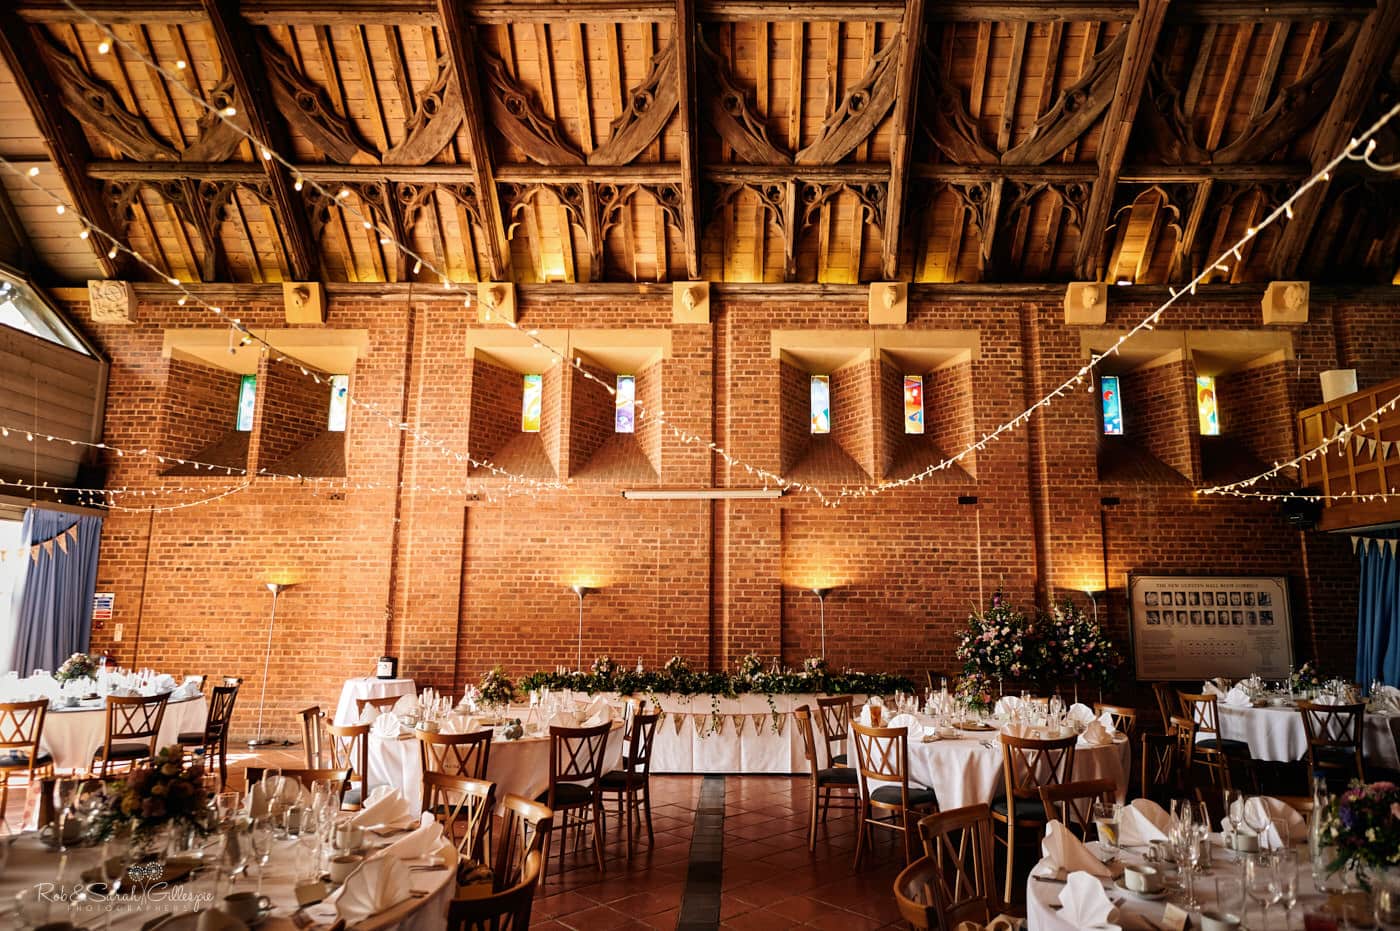 Avoncroft Guesten Hall set up for wedding reception